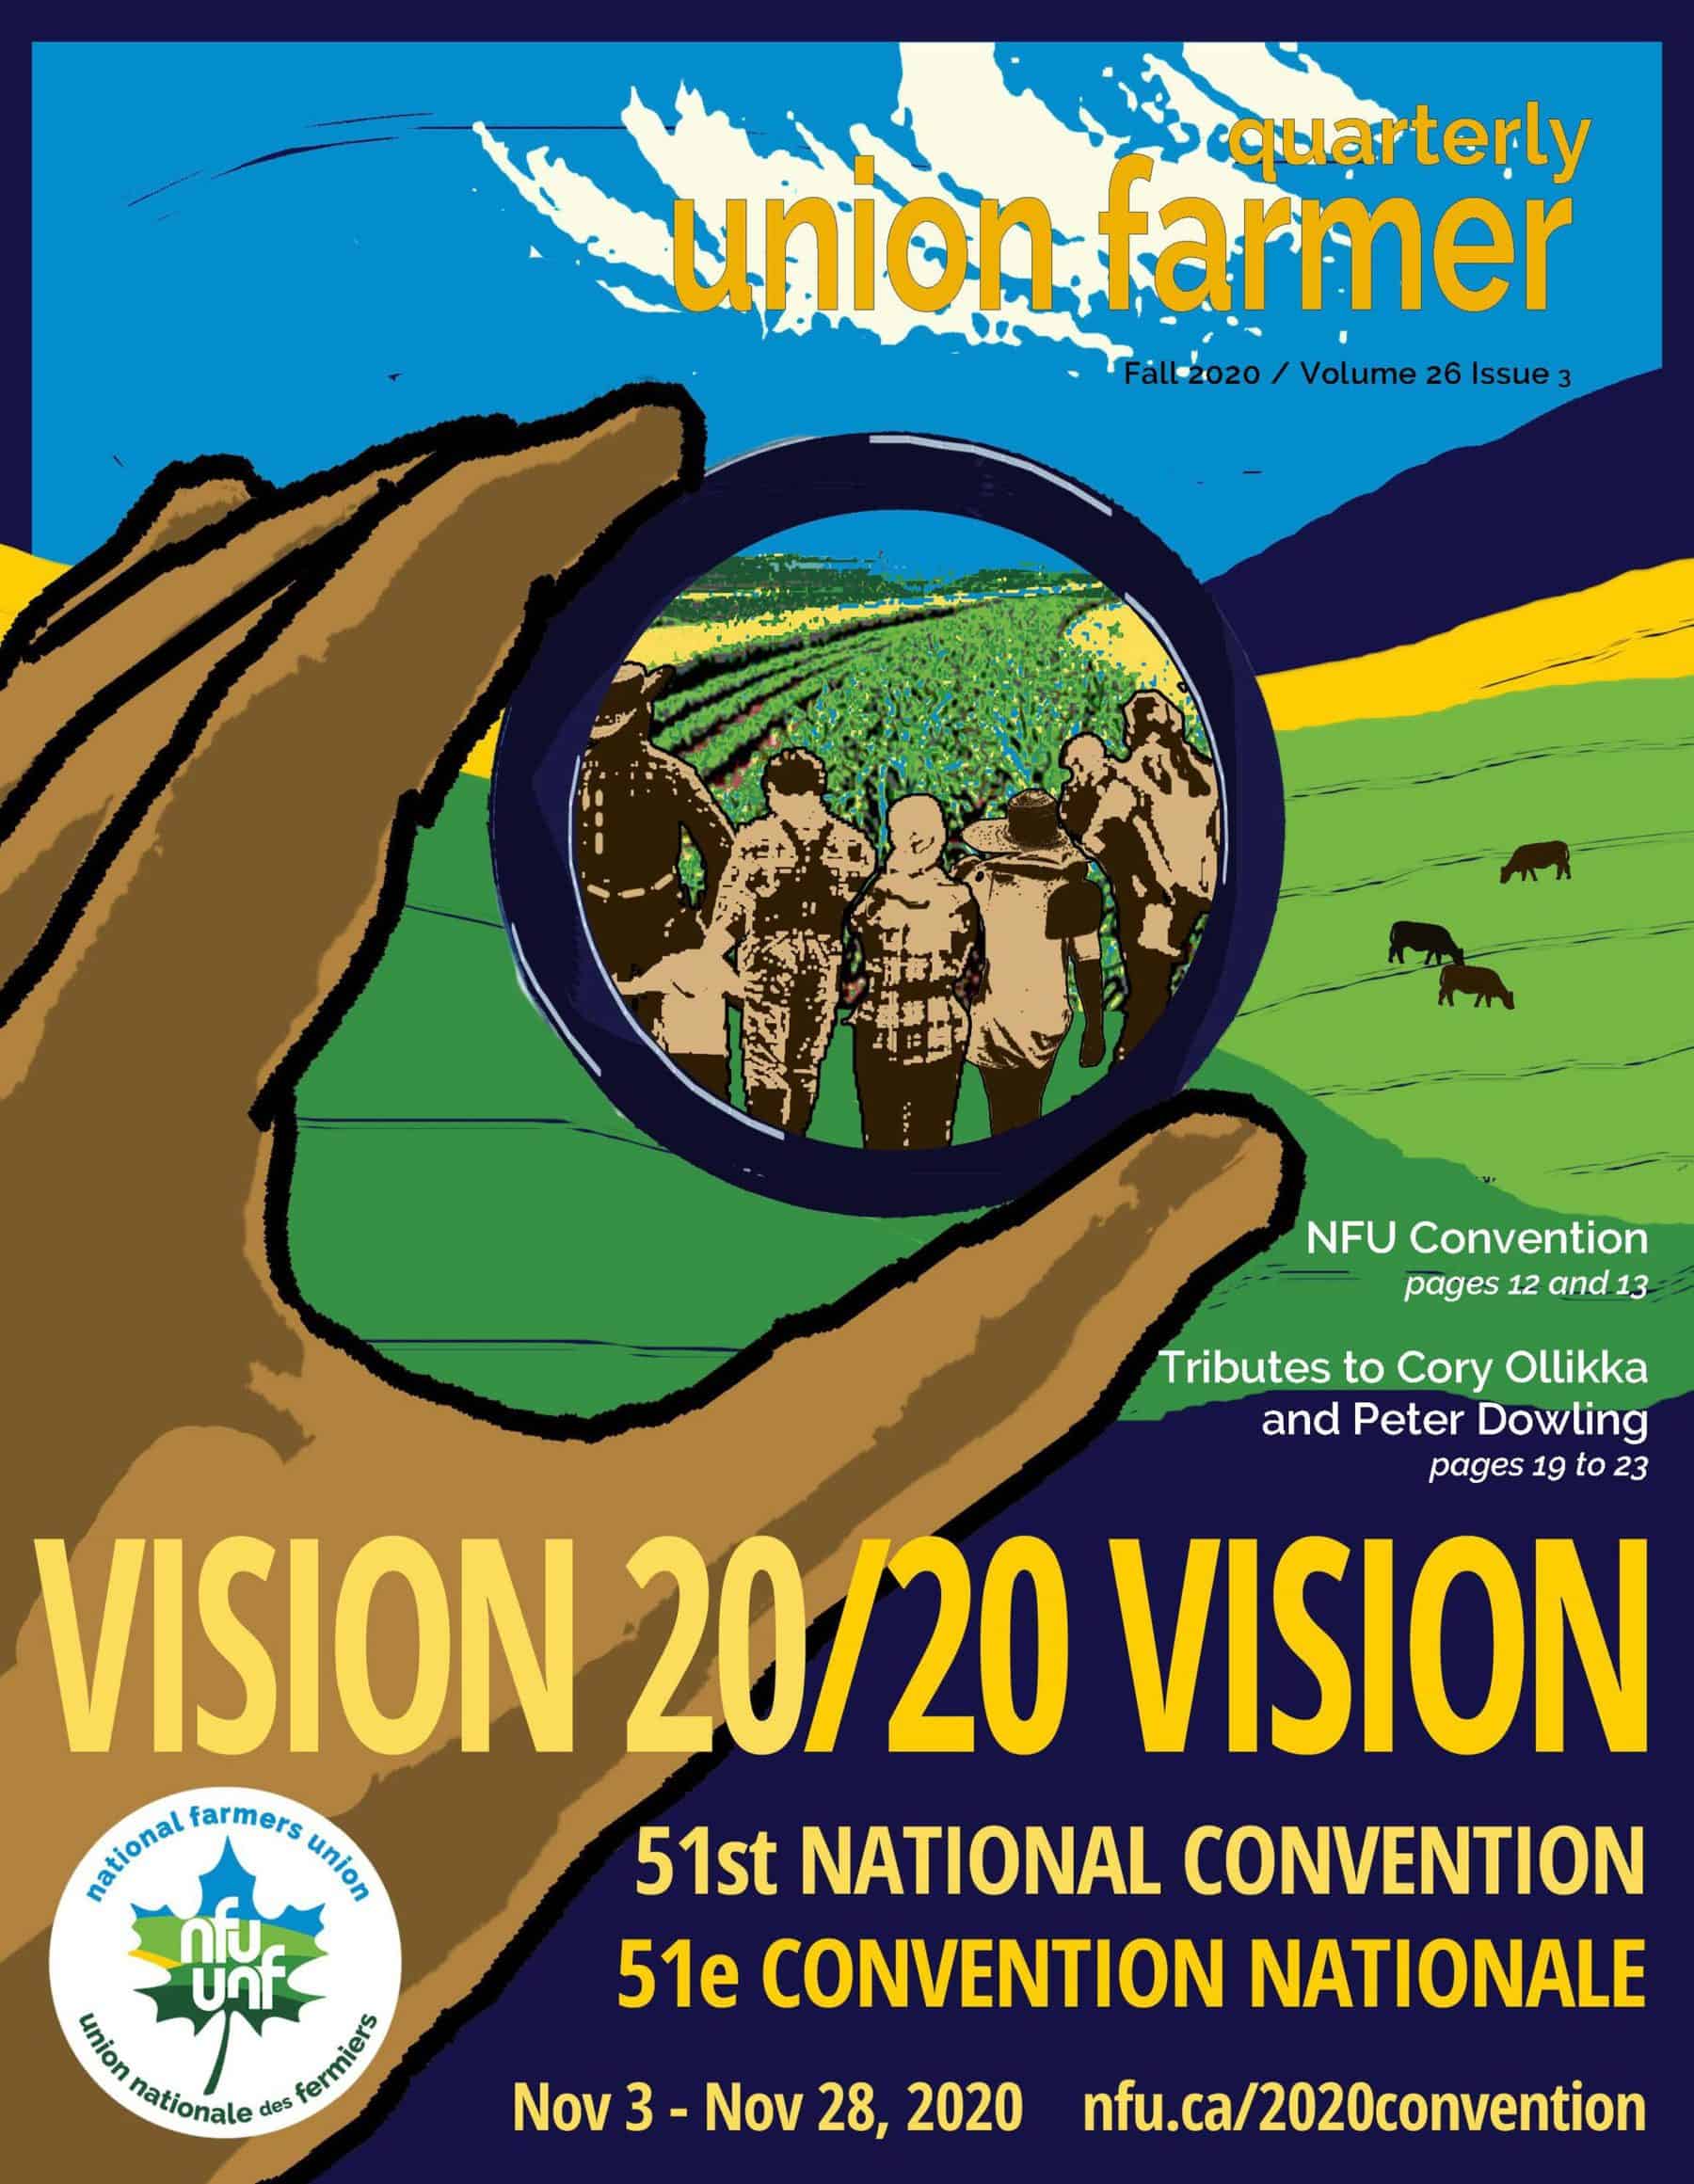 Union Farmer Quarterly: Automne 2020